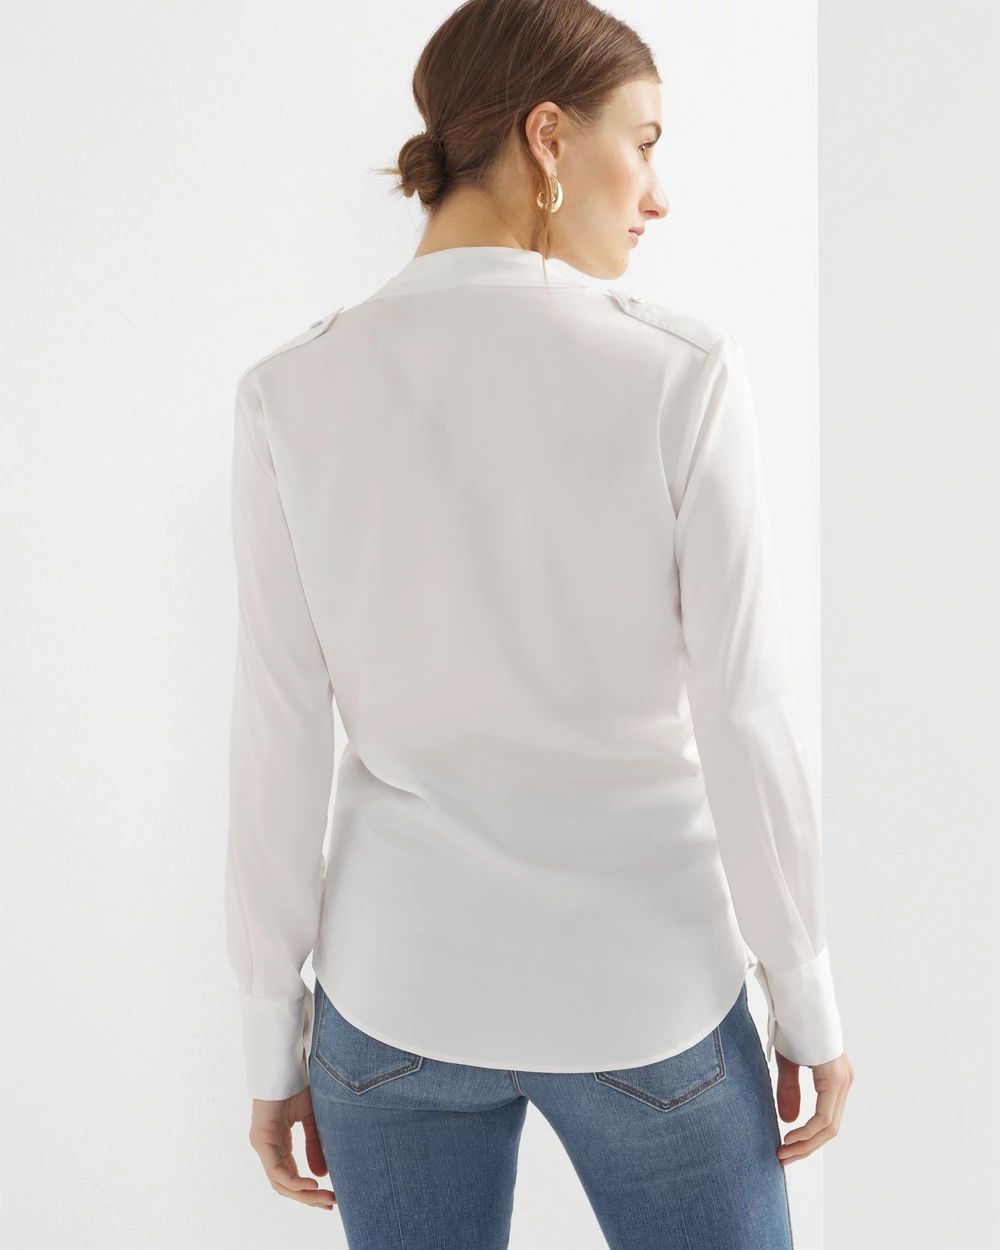 Long Sleeve Collar Pocket Shirt click to view larger image.